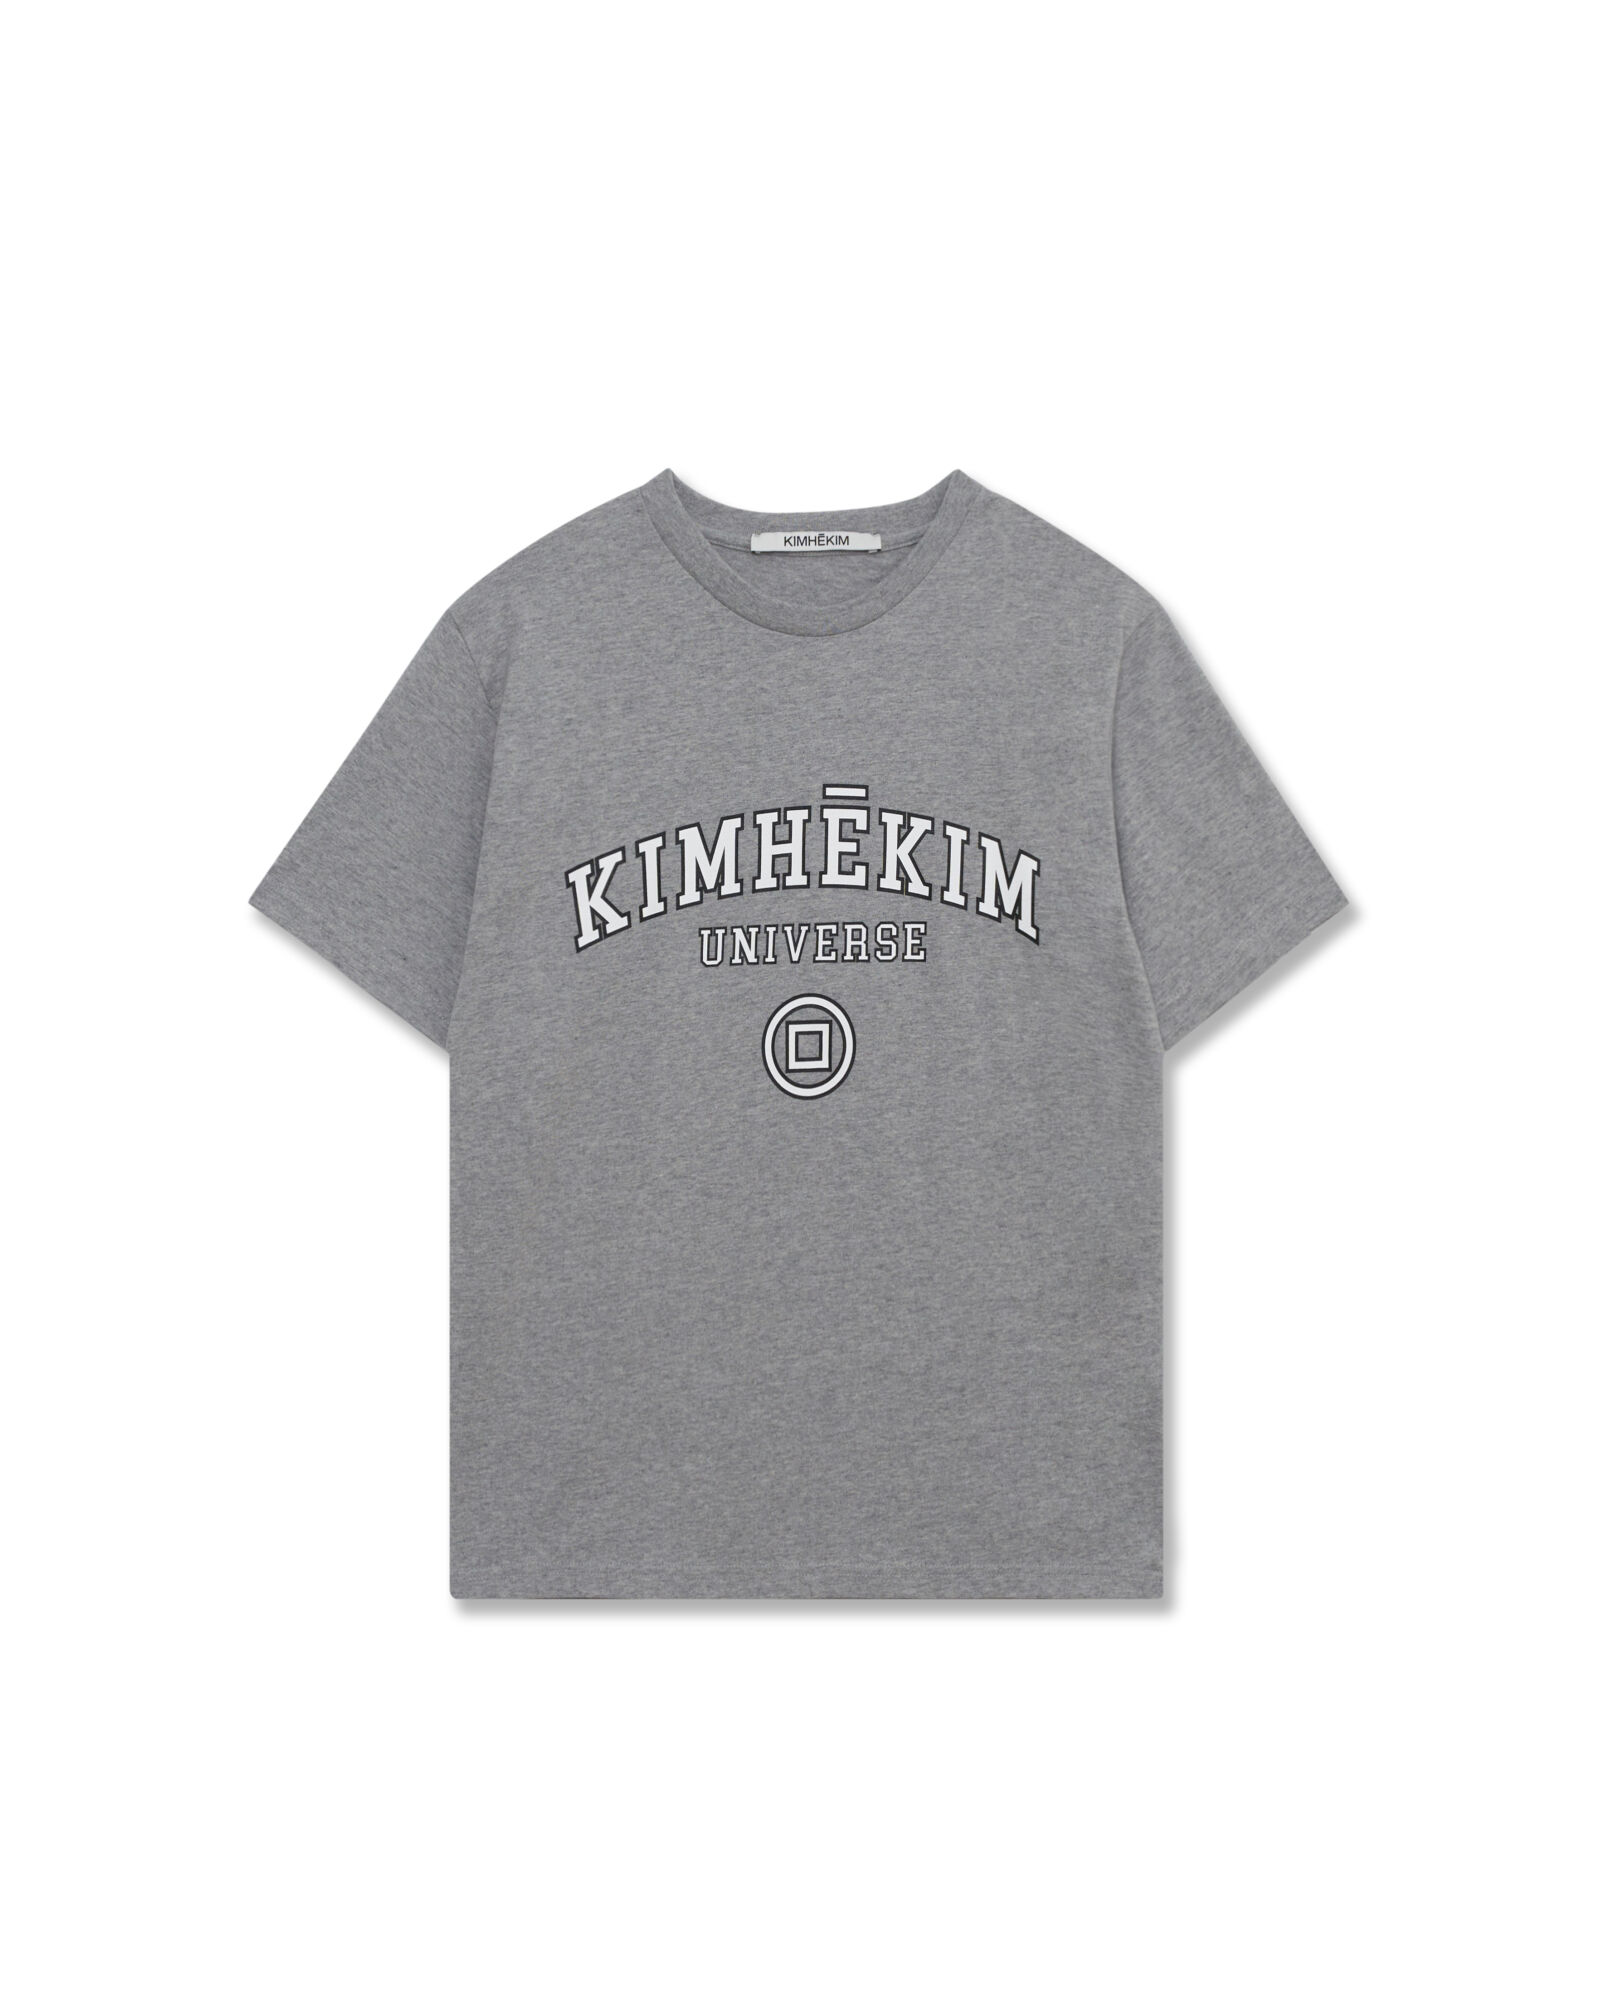 Kimhekim Universe T-Shirt Grey